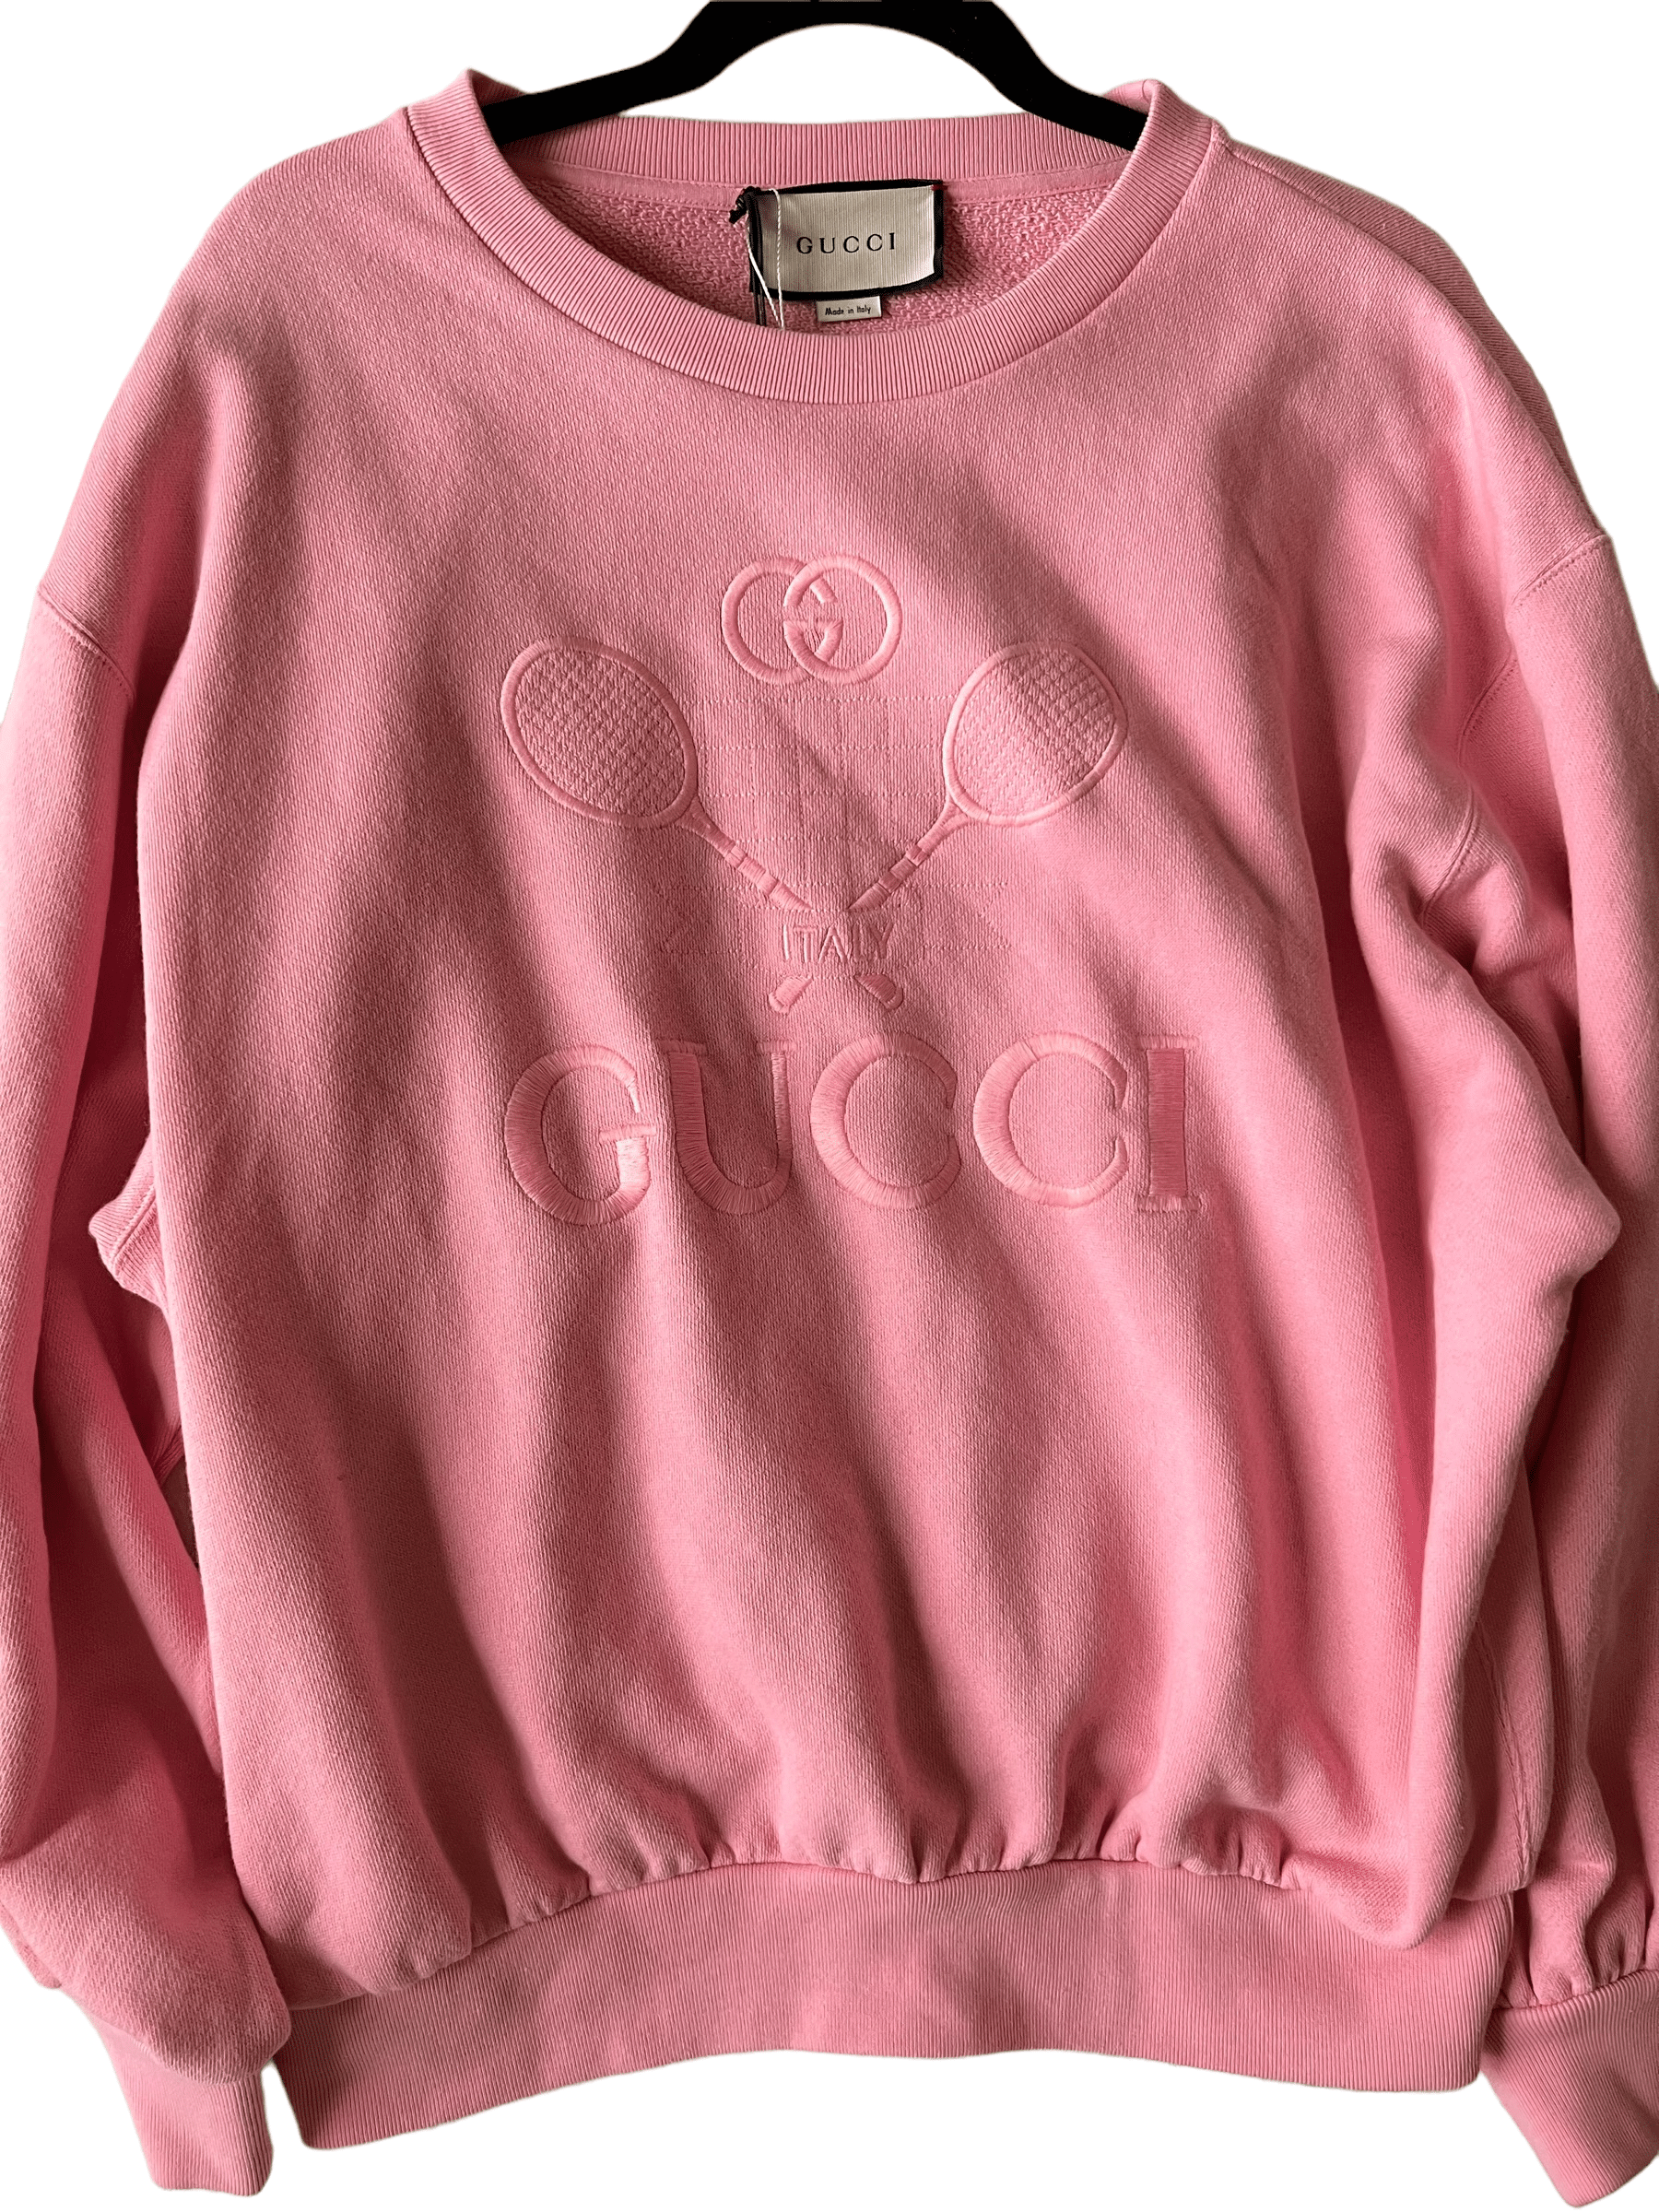 Gucci Pink Gucci Sweater UKL1295